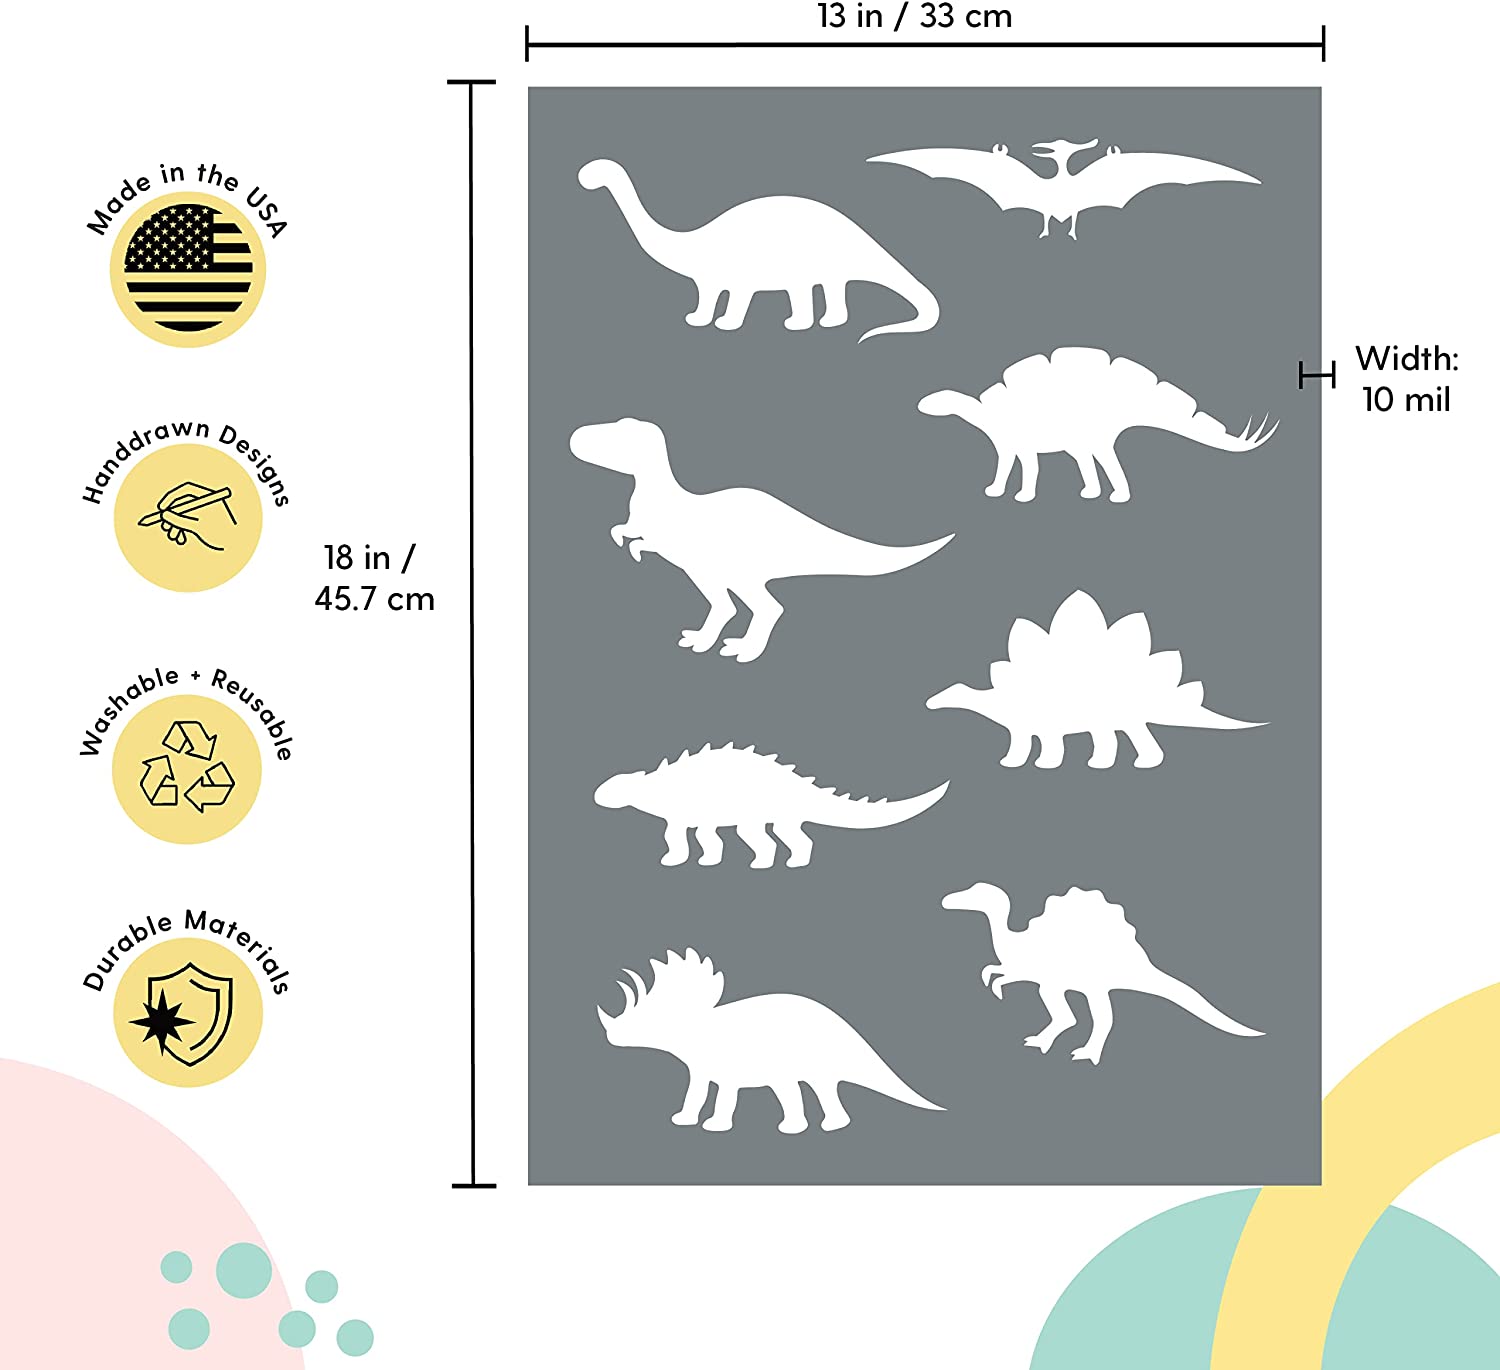 Fun Express Dinosaur Stencils for Kids - 12 pack of Plastic Drawing Stencils